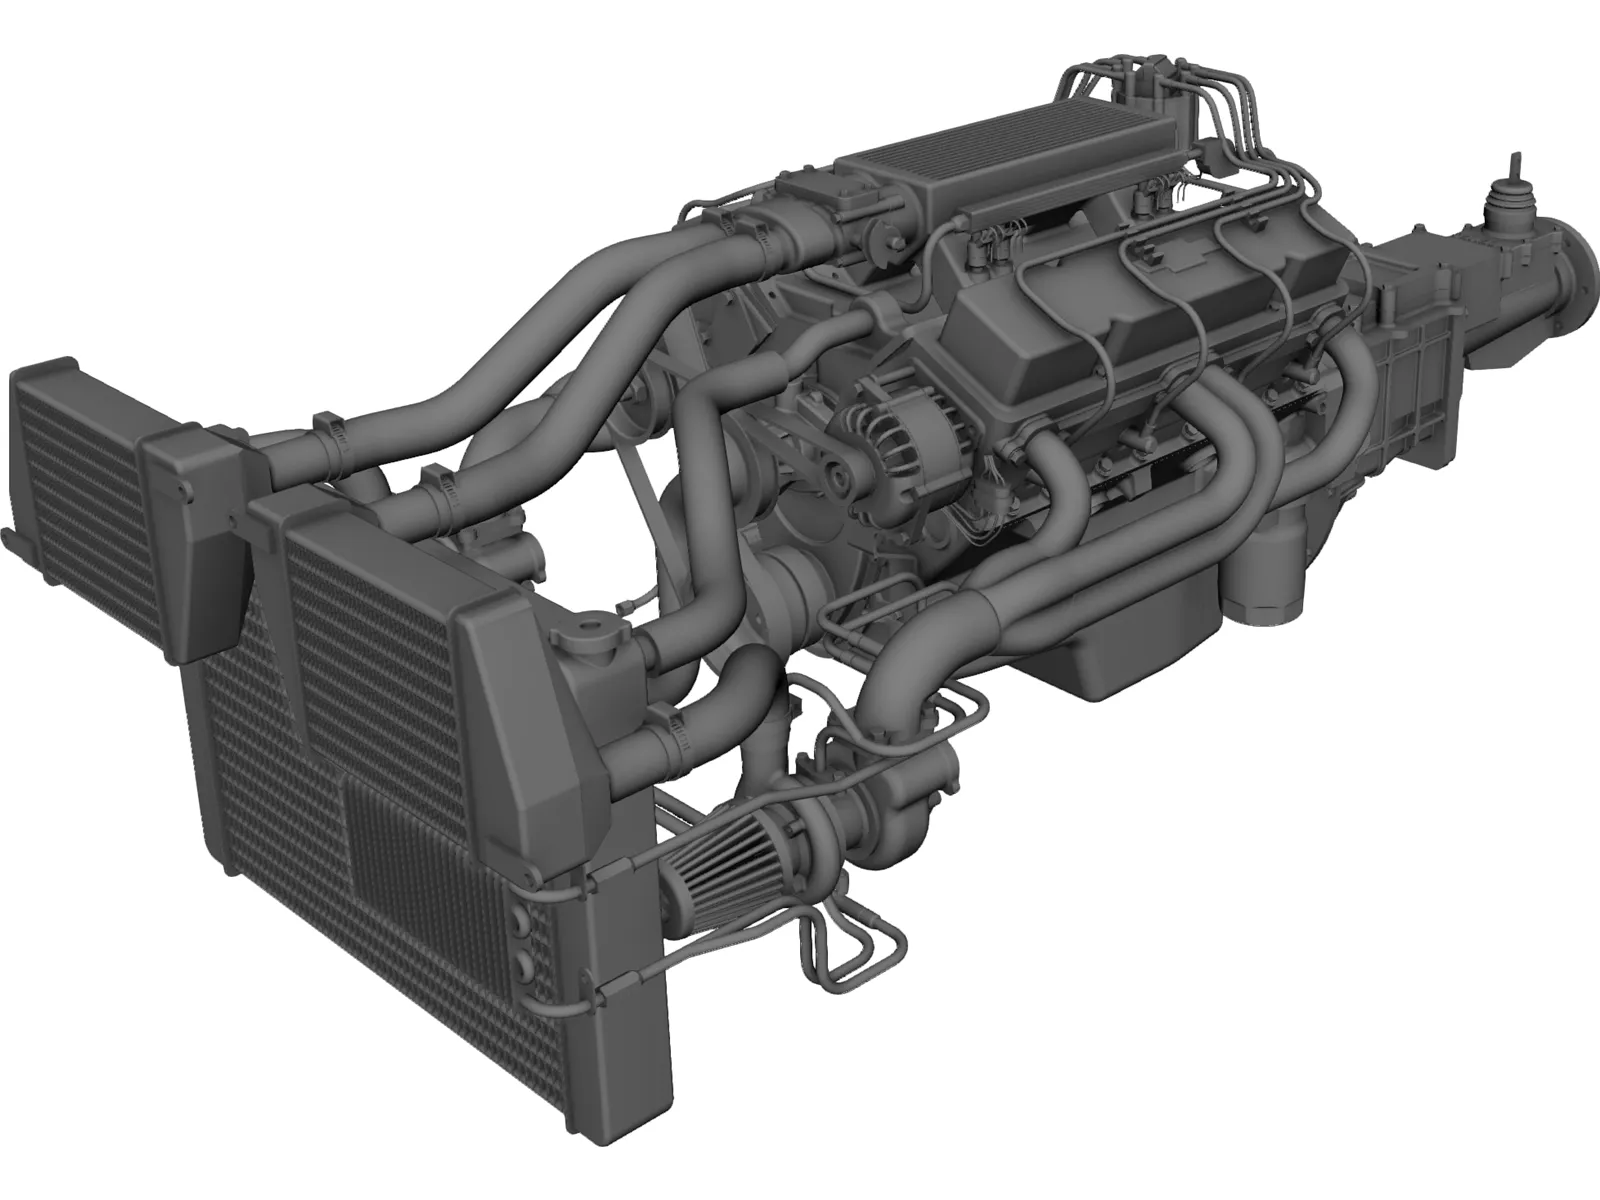 Engine GM 350 V8 Turbo 3D Model